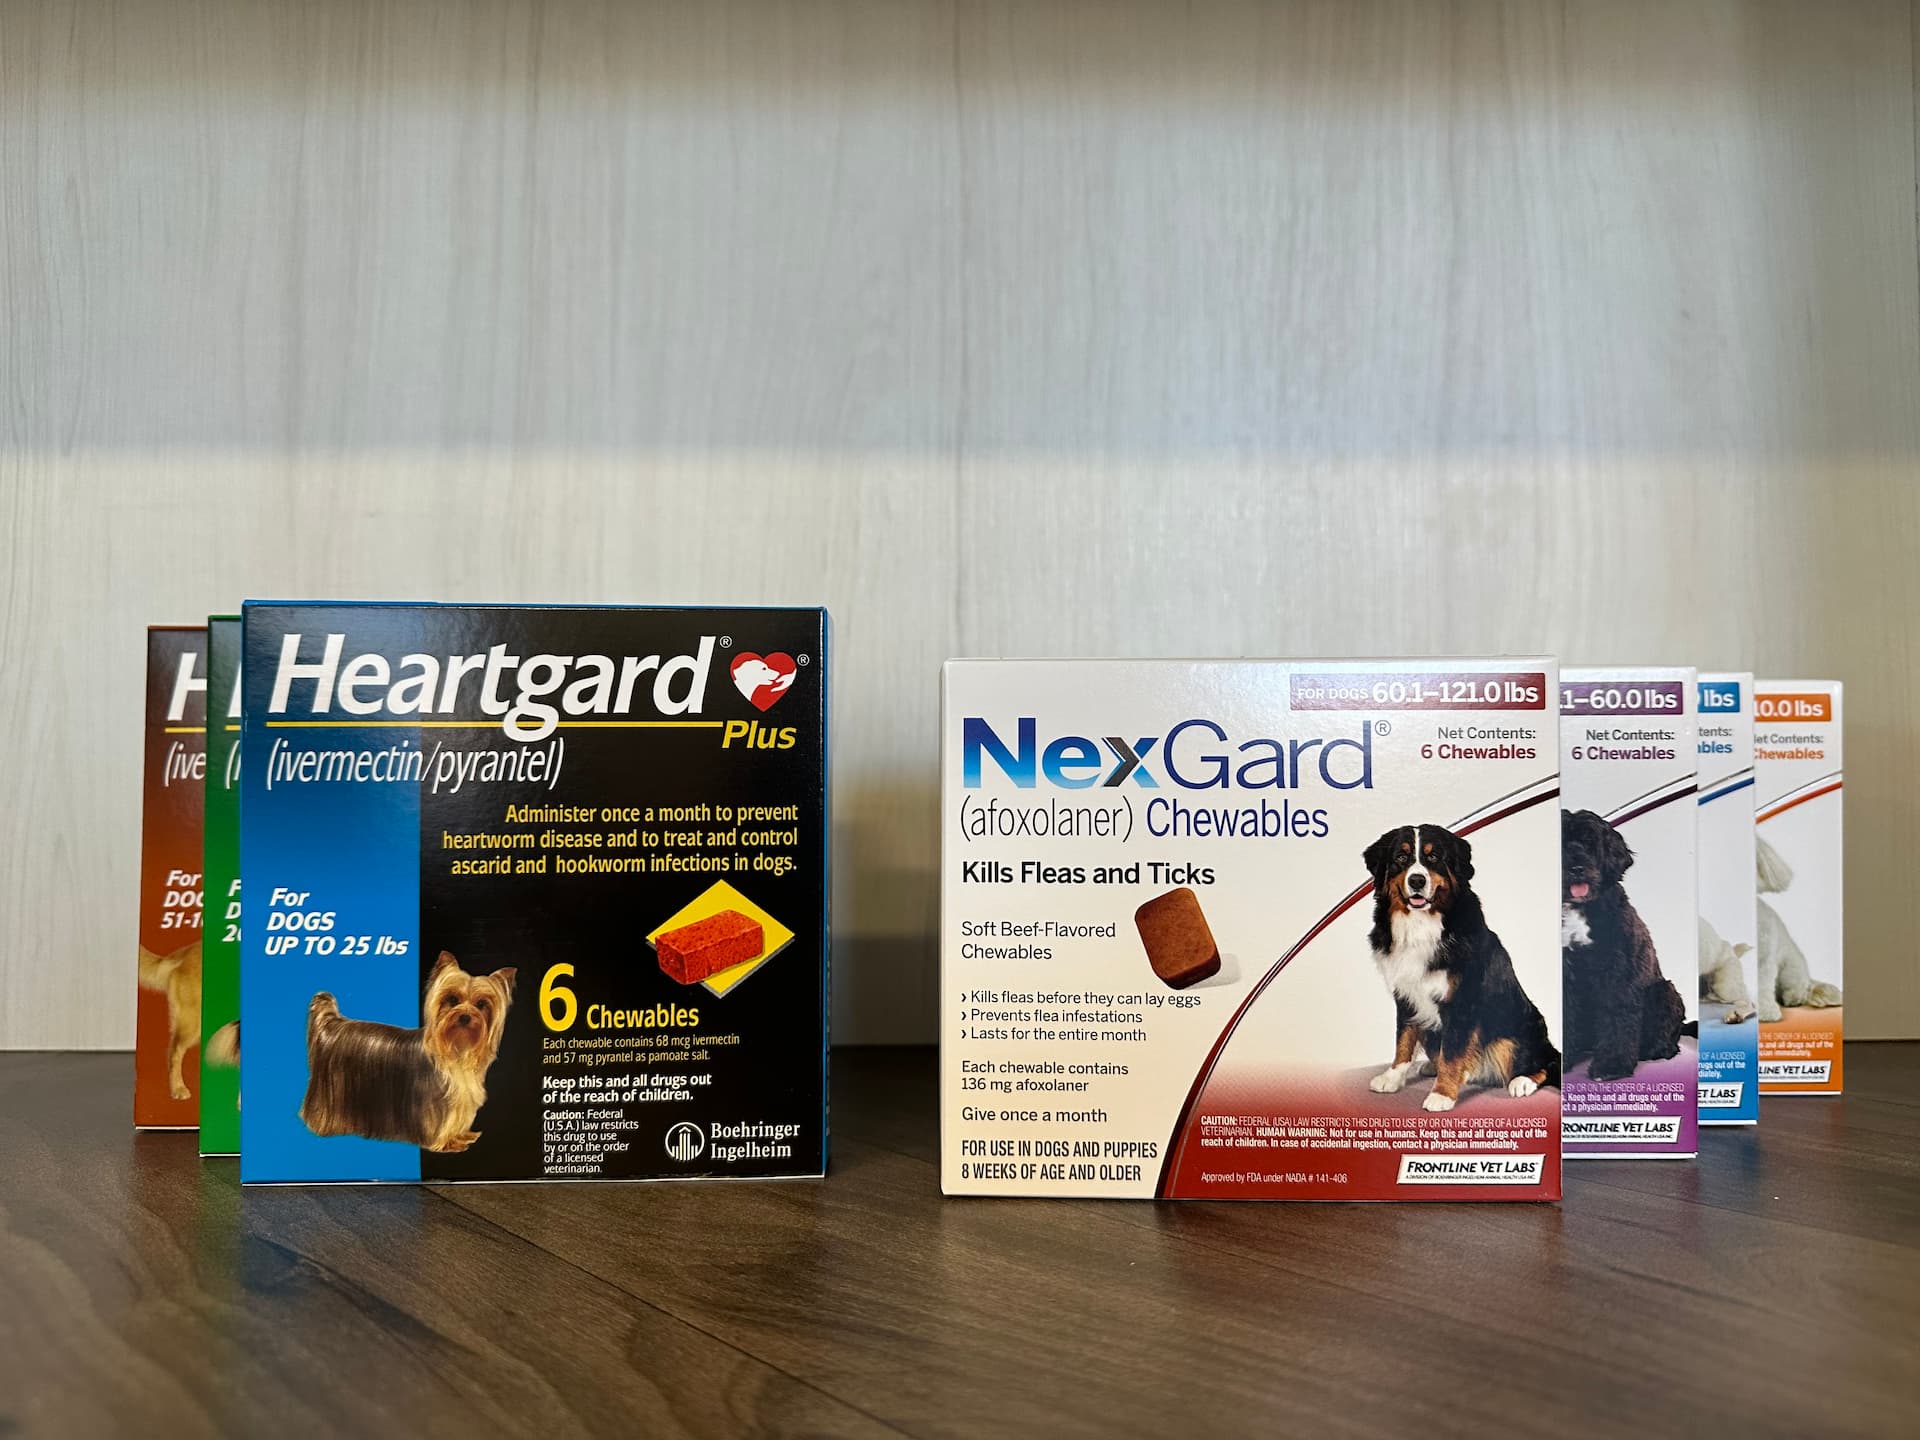 Heartgard and nexgard products on a table.